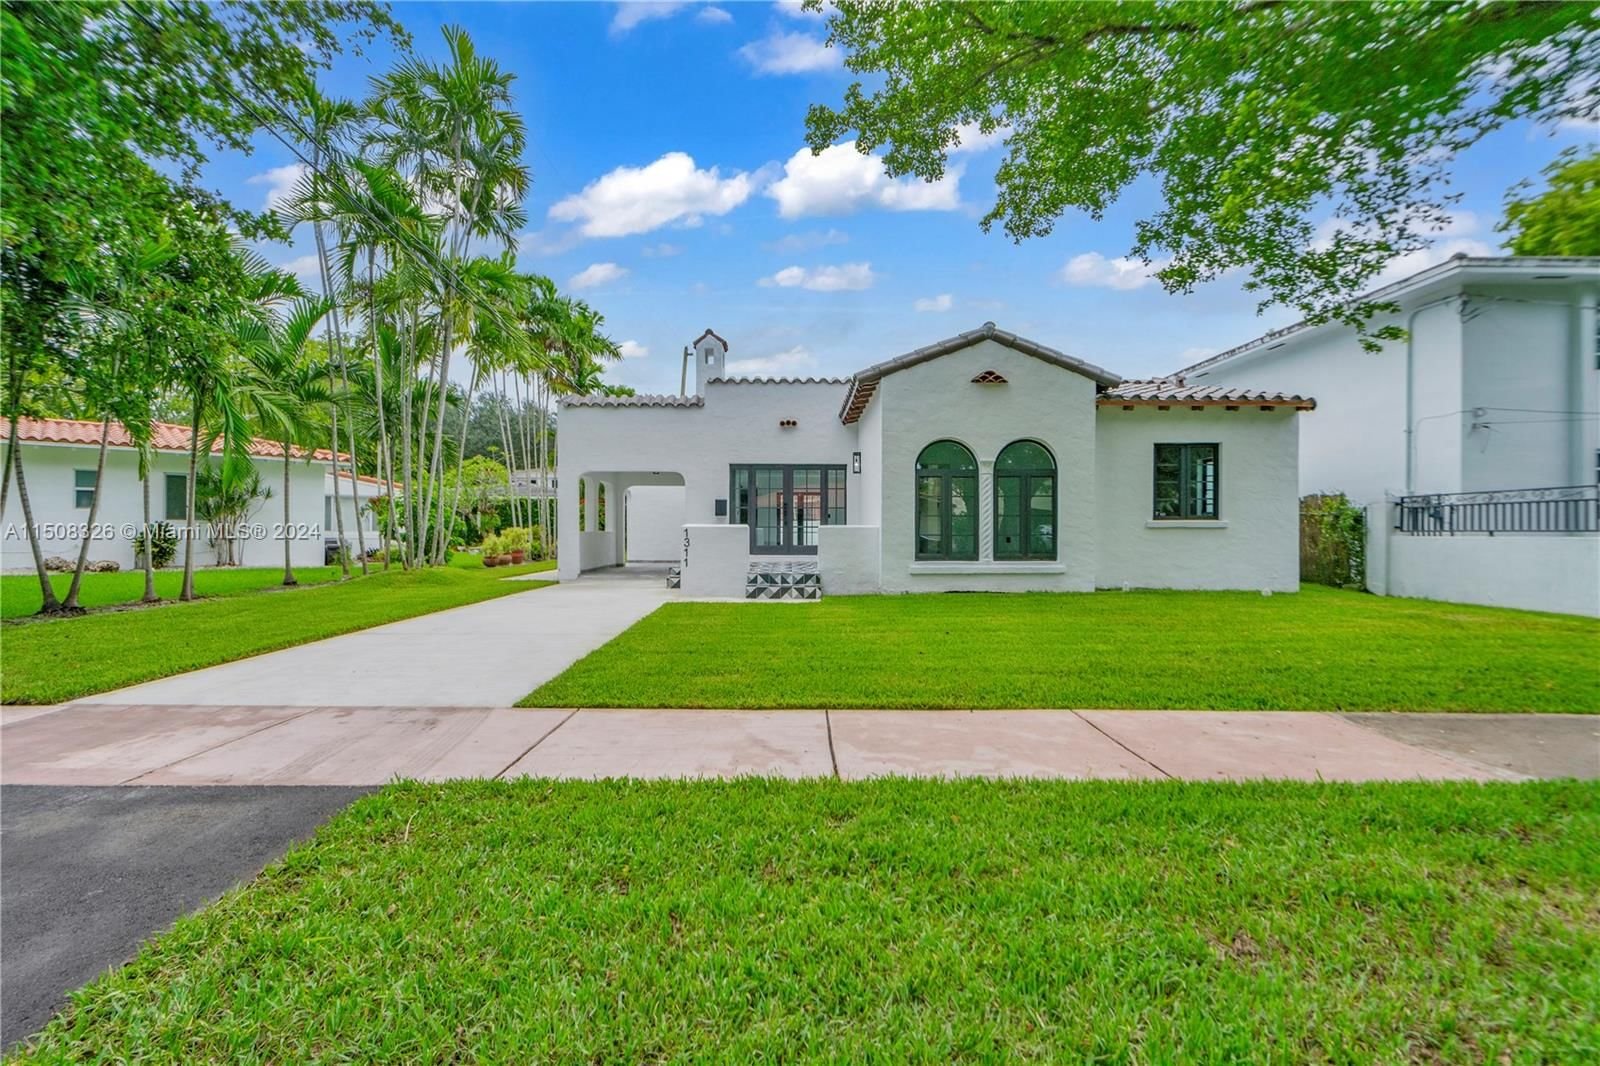 Real estate property located at 1311 Pizarro St, Miami-Dade County, CORAL GABLES GRANADA SEC, Coral Gables, FL